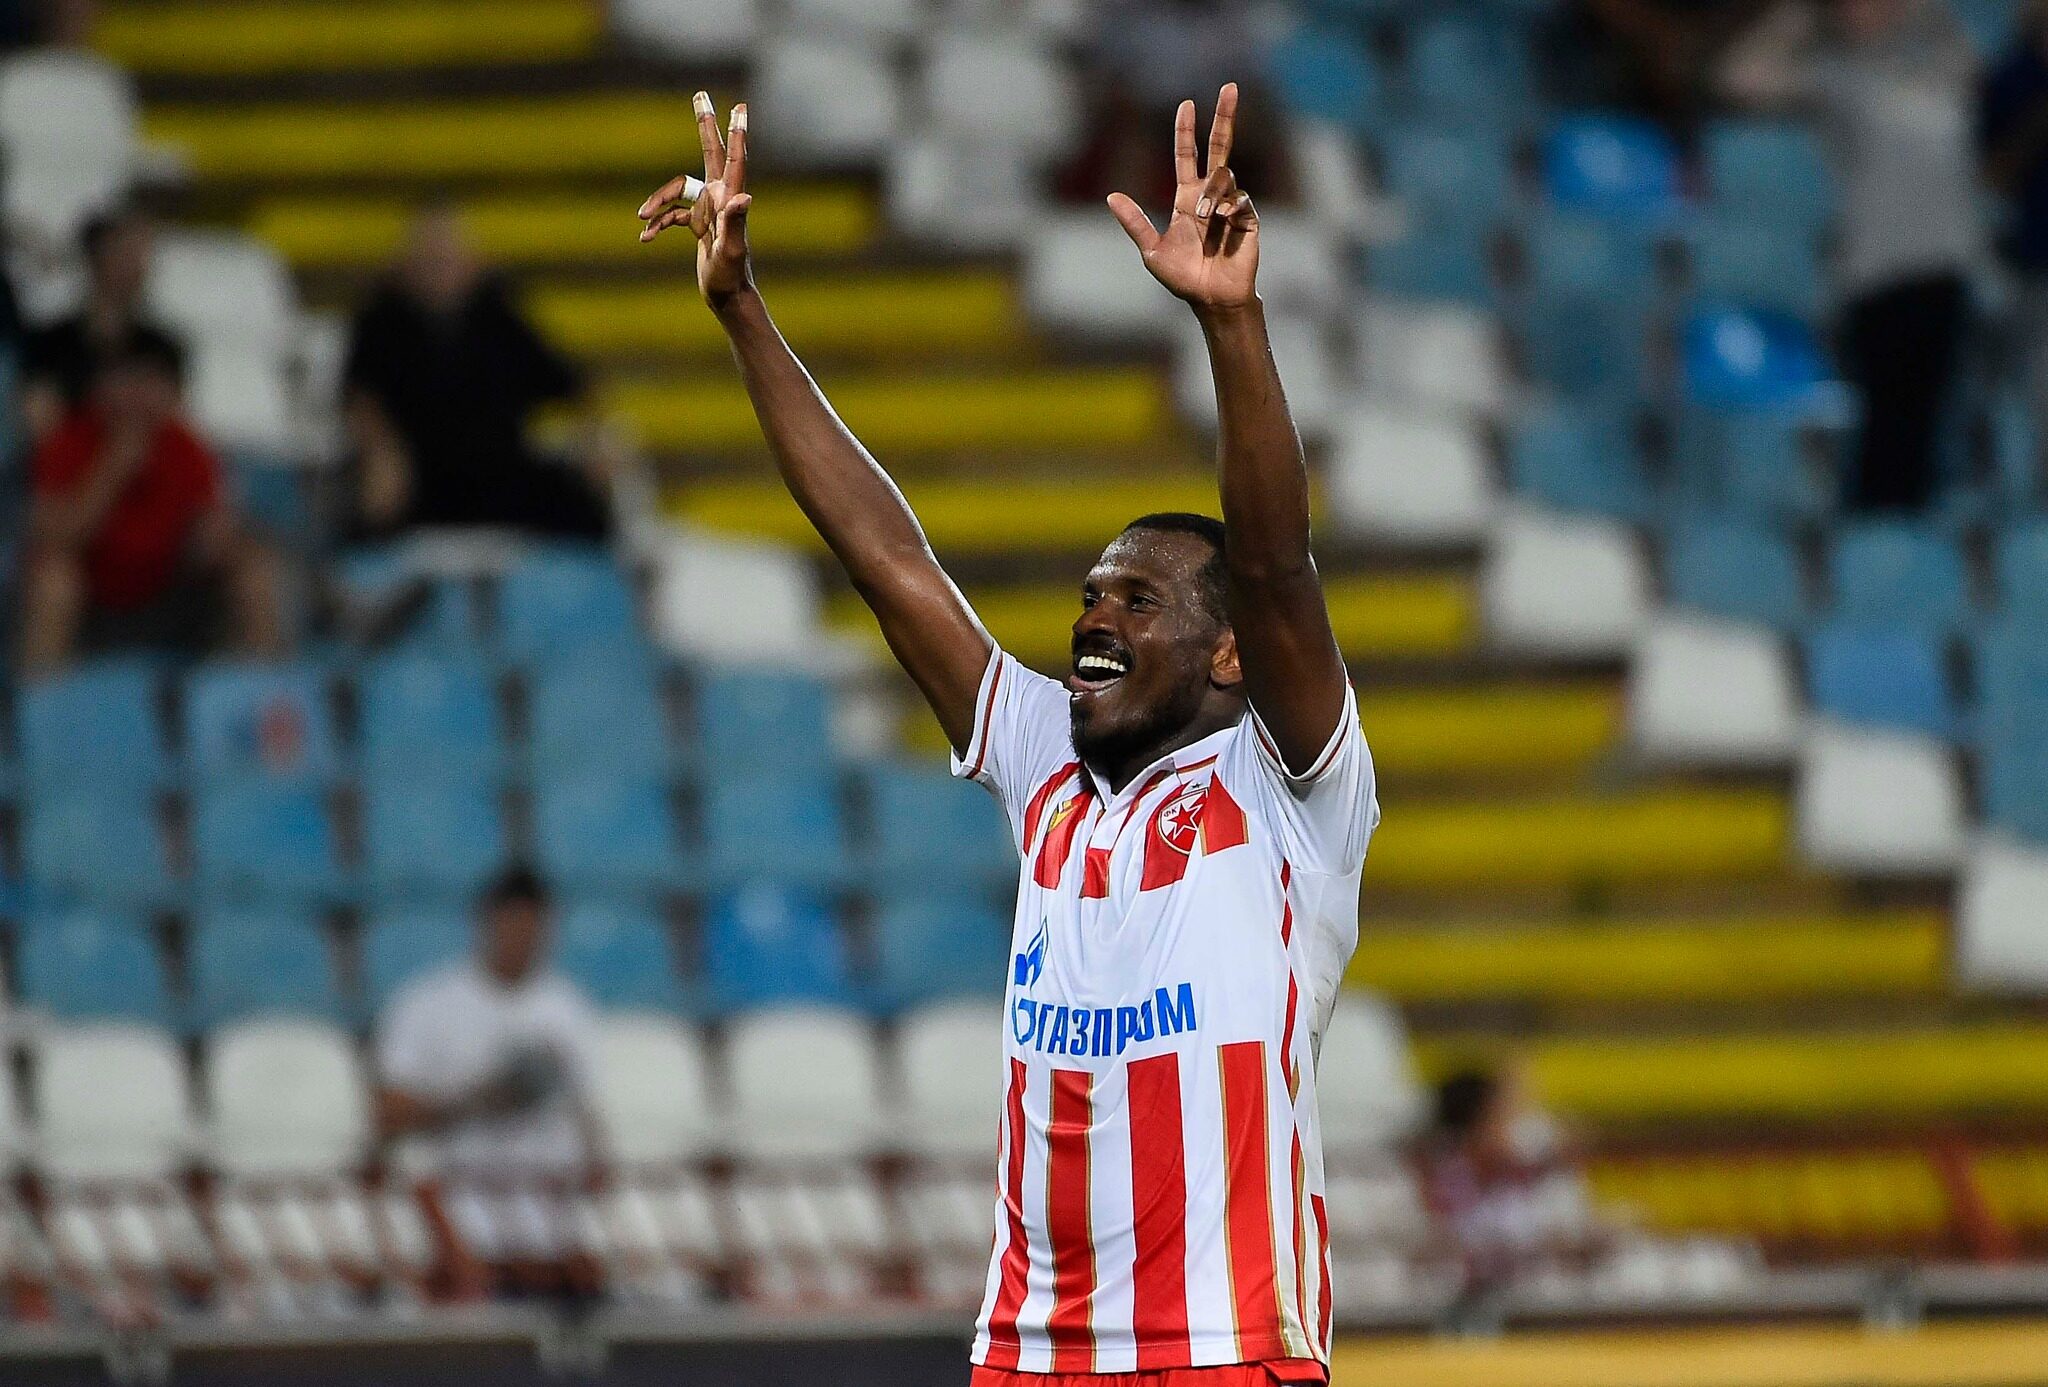 El Fardou, Super Liga | El Fardou Ben Mohamed signe son deuxième but, Comoros Football 269 | Portail du football des Comores